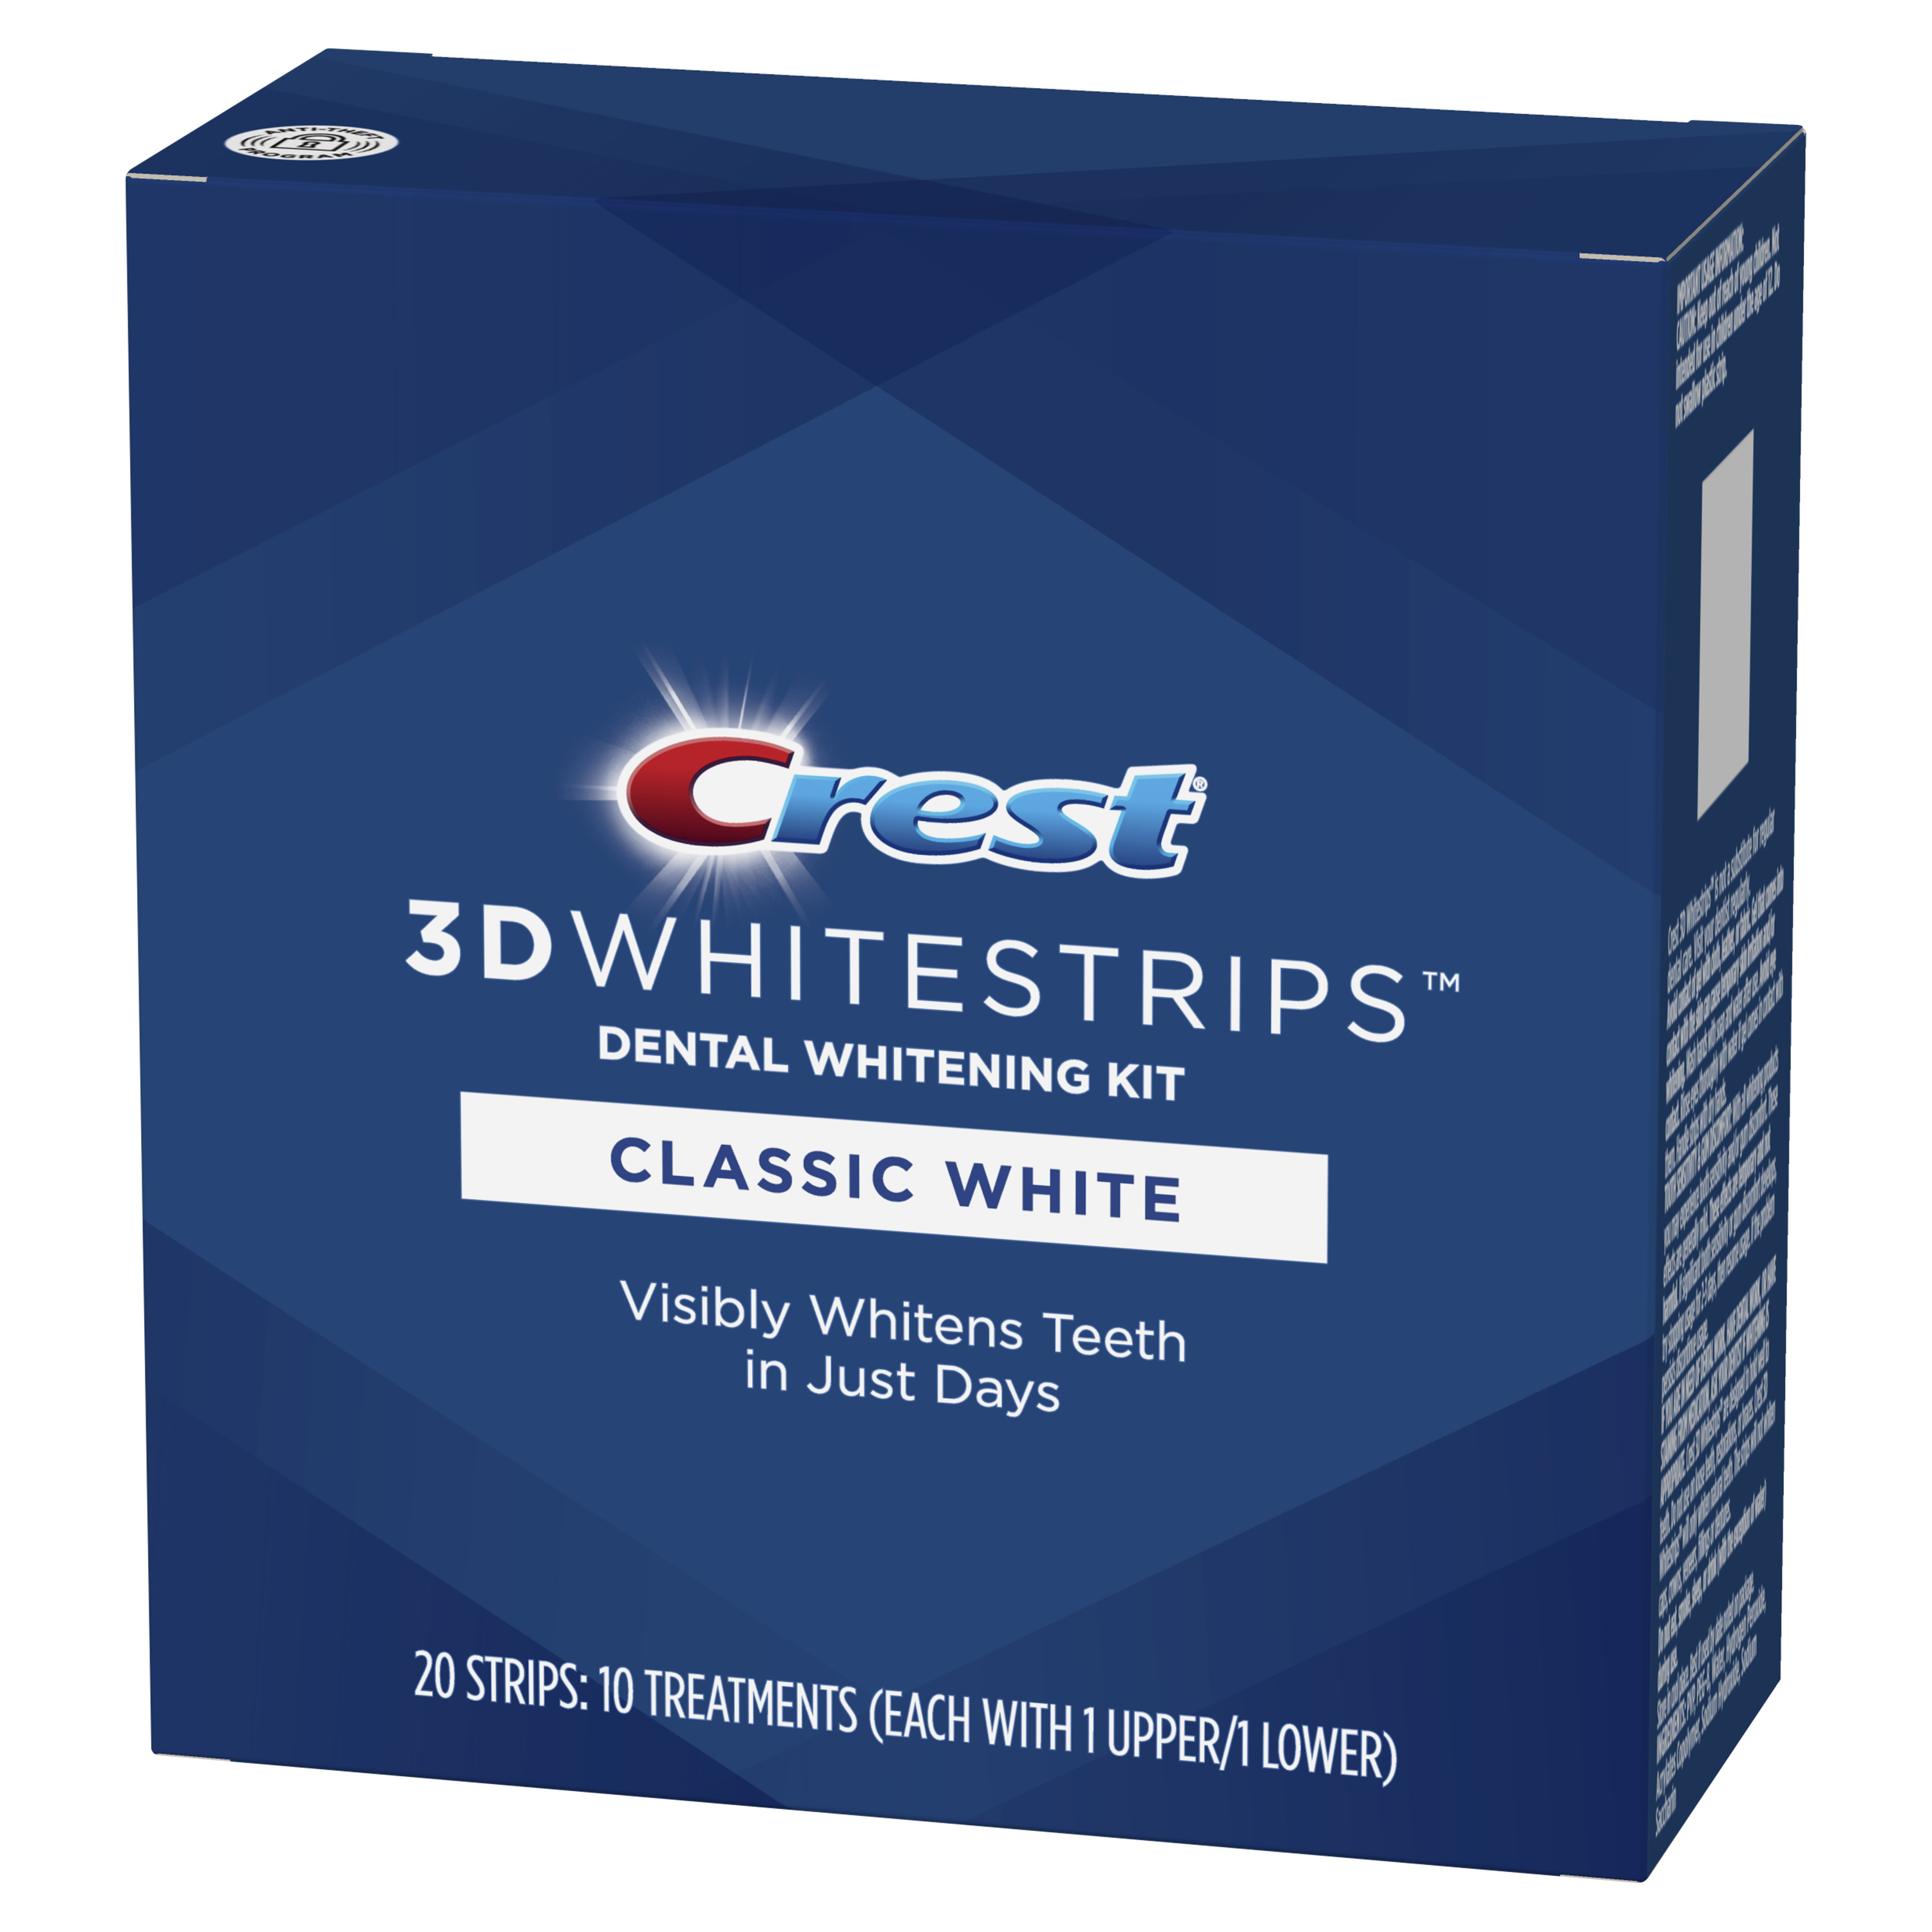 Crest 3D Whitestrips Classic White Teeth Whitening Kit, 20 Strips - image 4 of 6